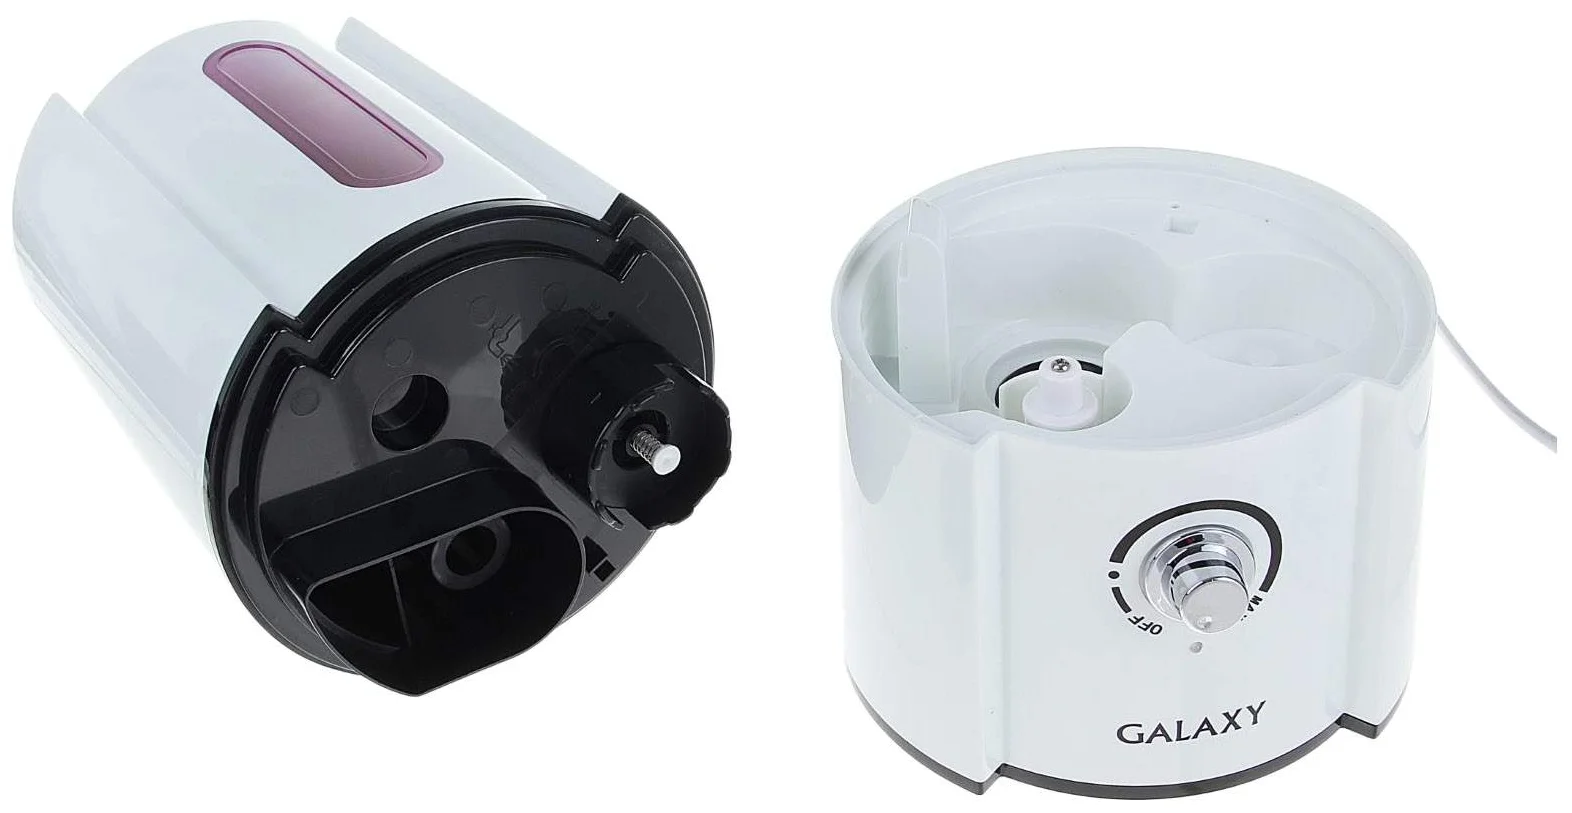 GALAXY GL-8003 - объем резервуара для воды: 2.5 л